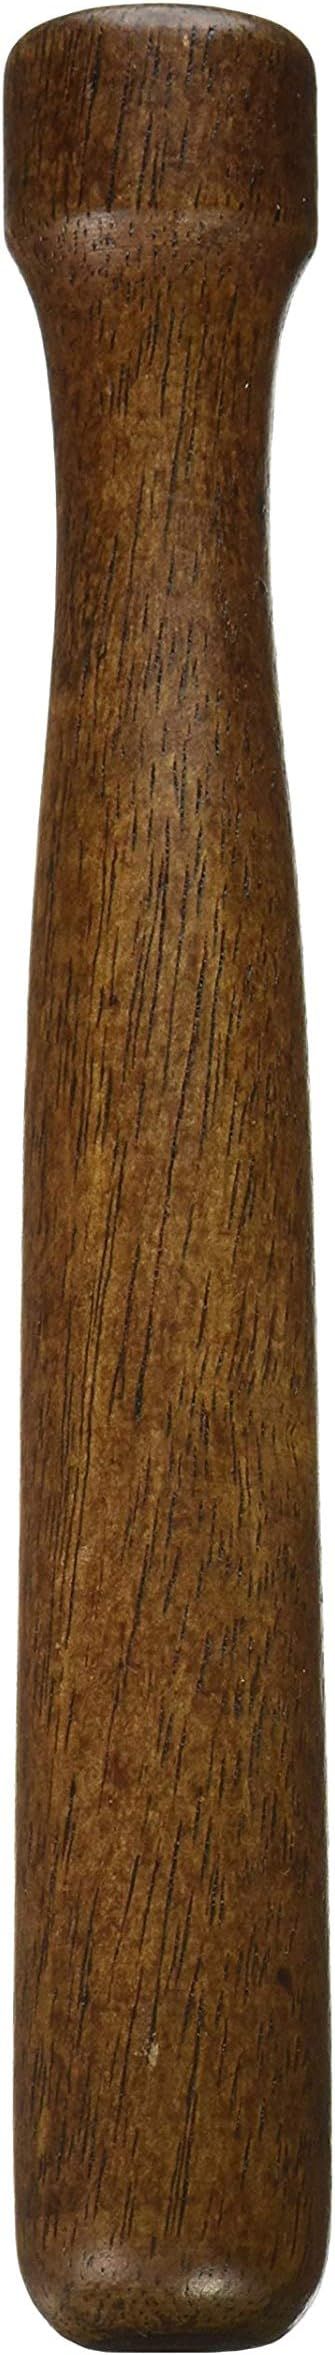 Winco Wooden Muddler, Lacquered Walnut, Brown, Medium | Amazon (US)